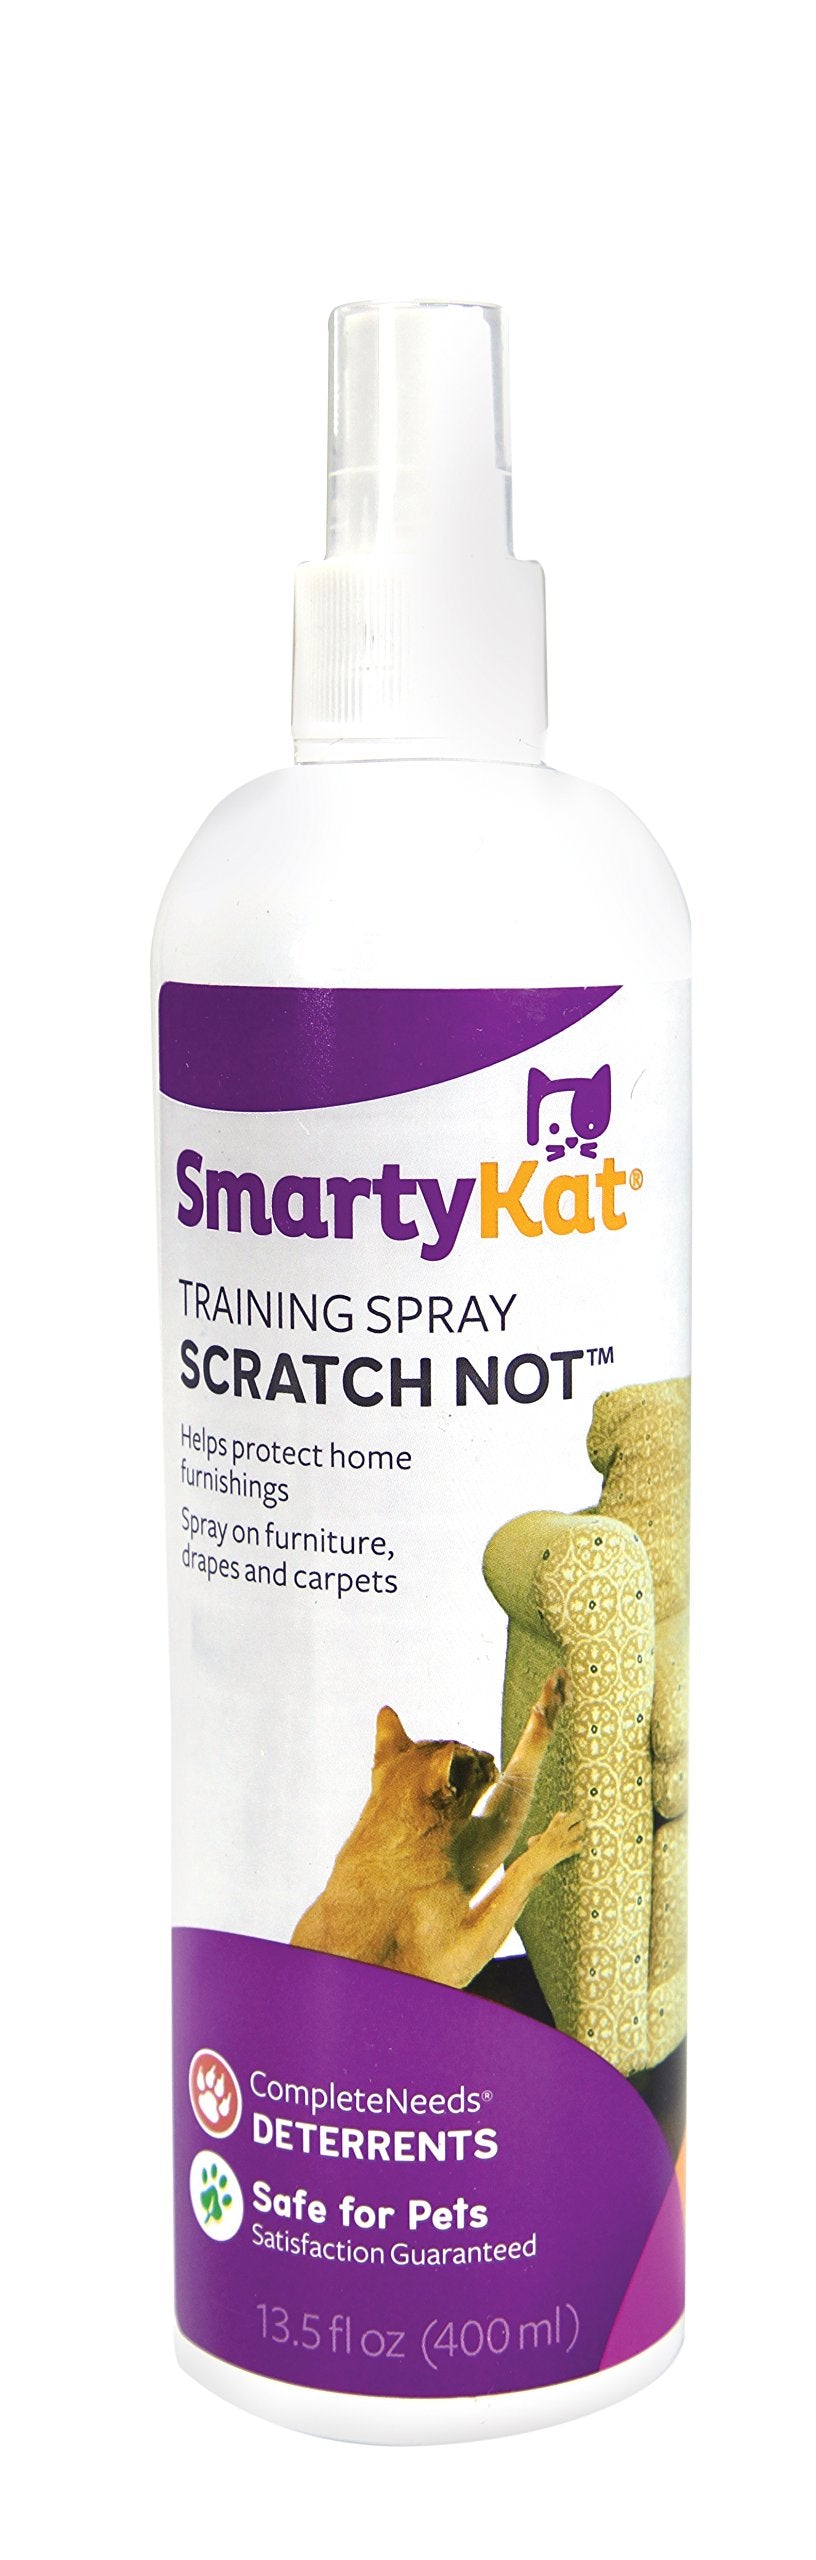 SmartyKat Scratch Not Anti-Scratch Training Spray Scratch Deterrent